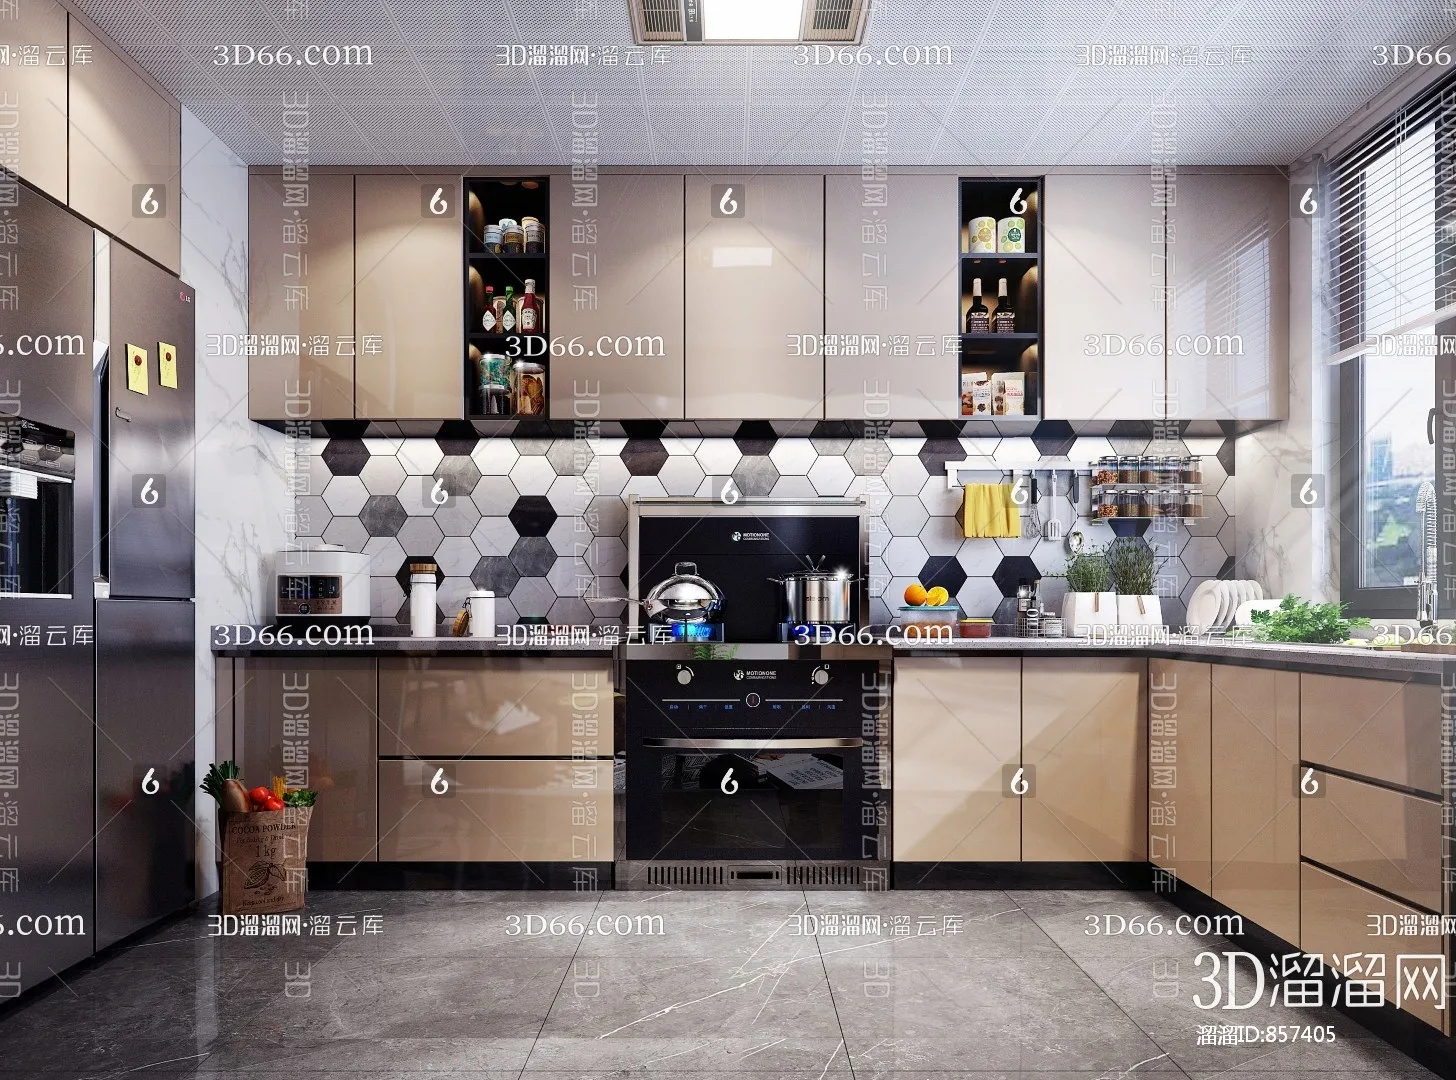 Kitchen 3D Scenes – 0571